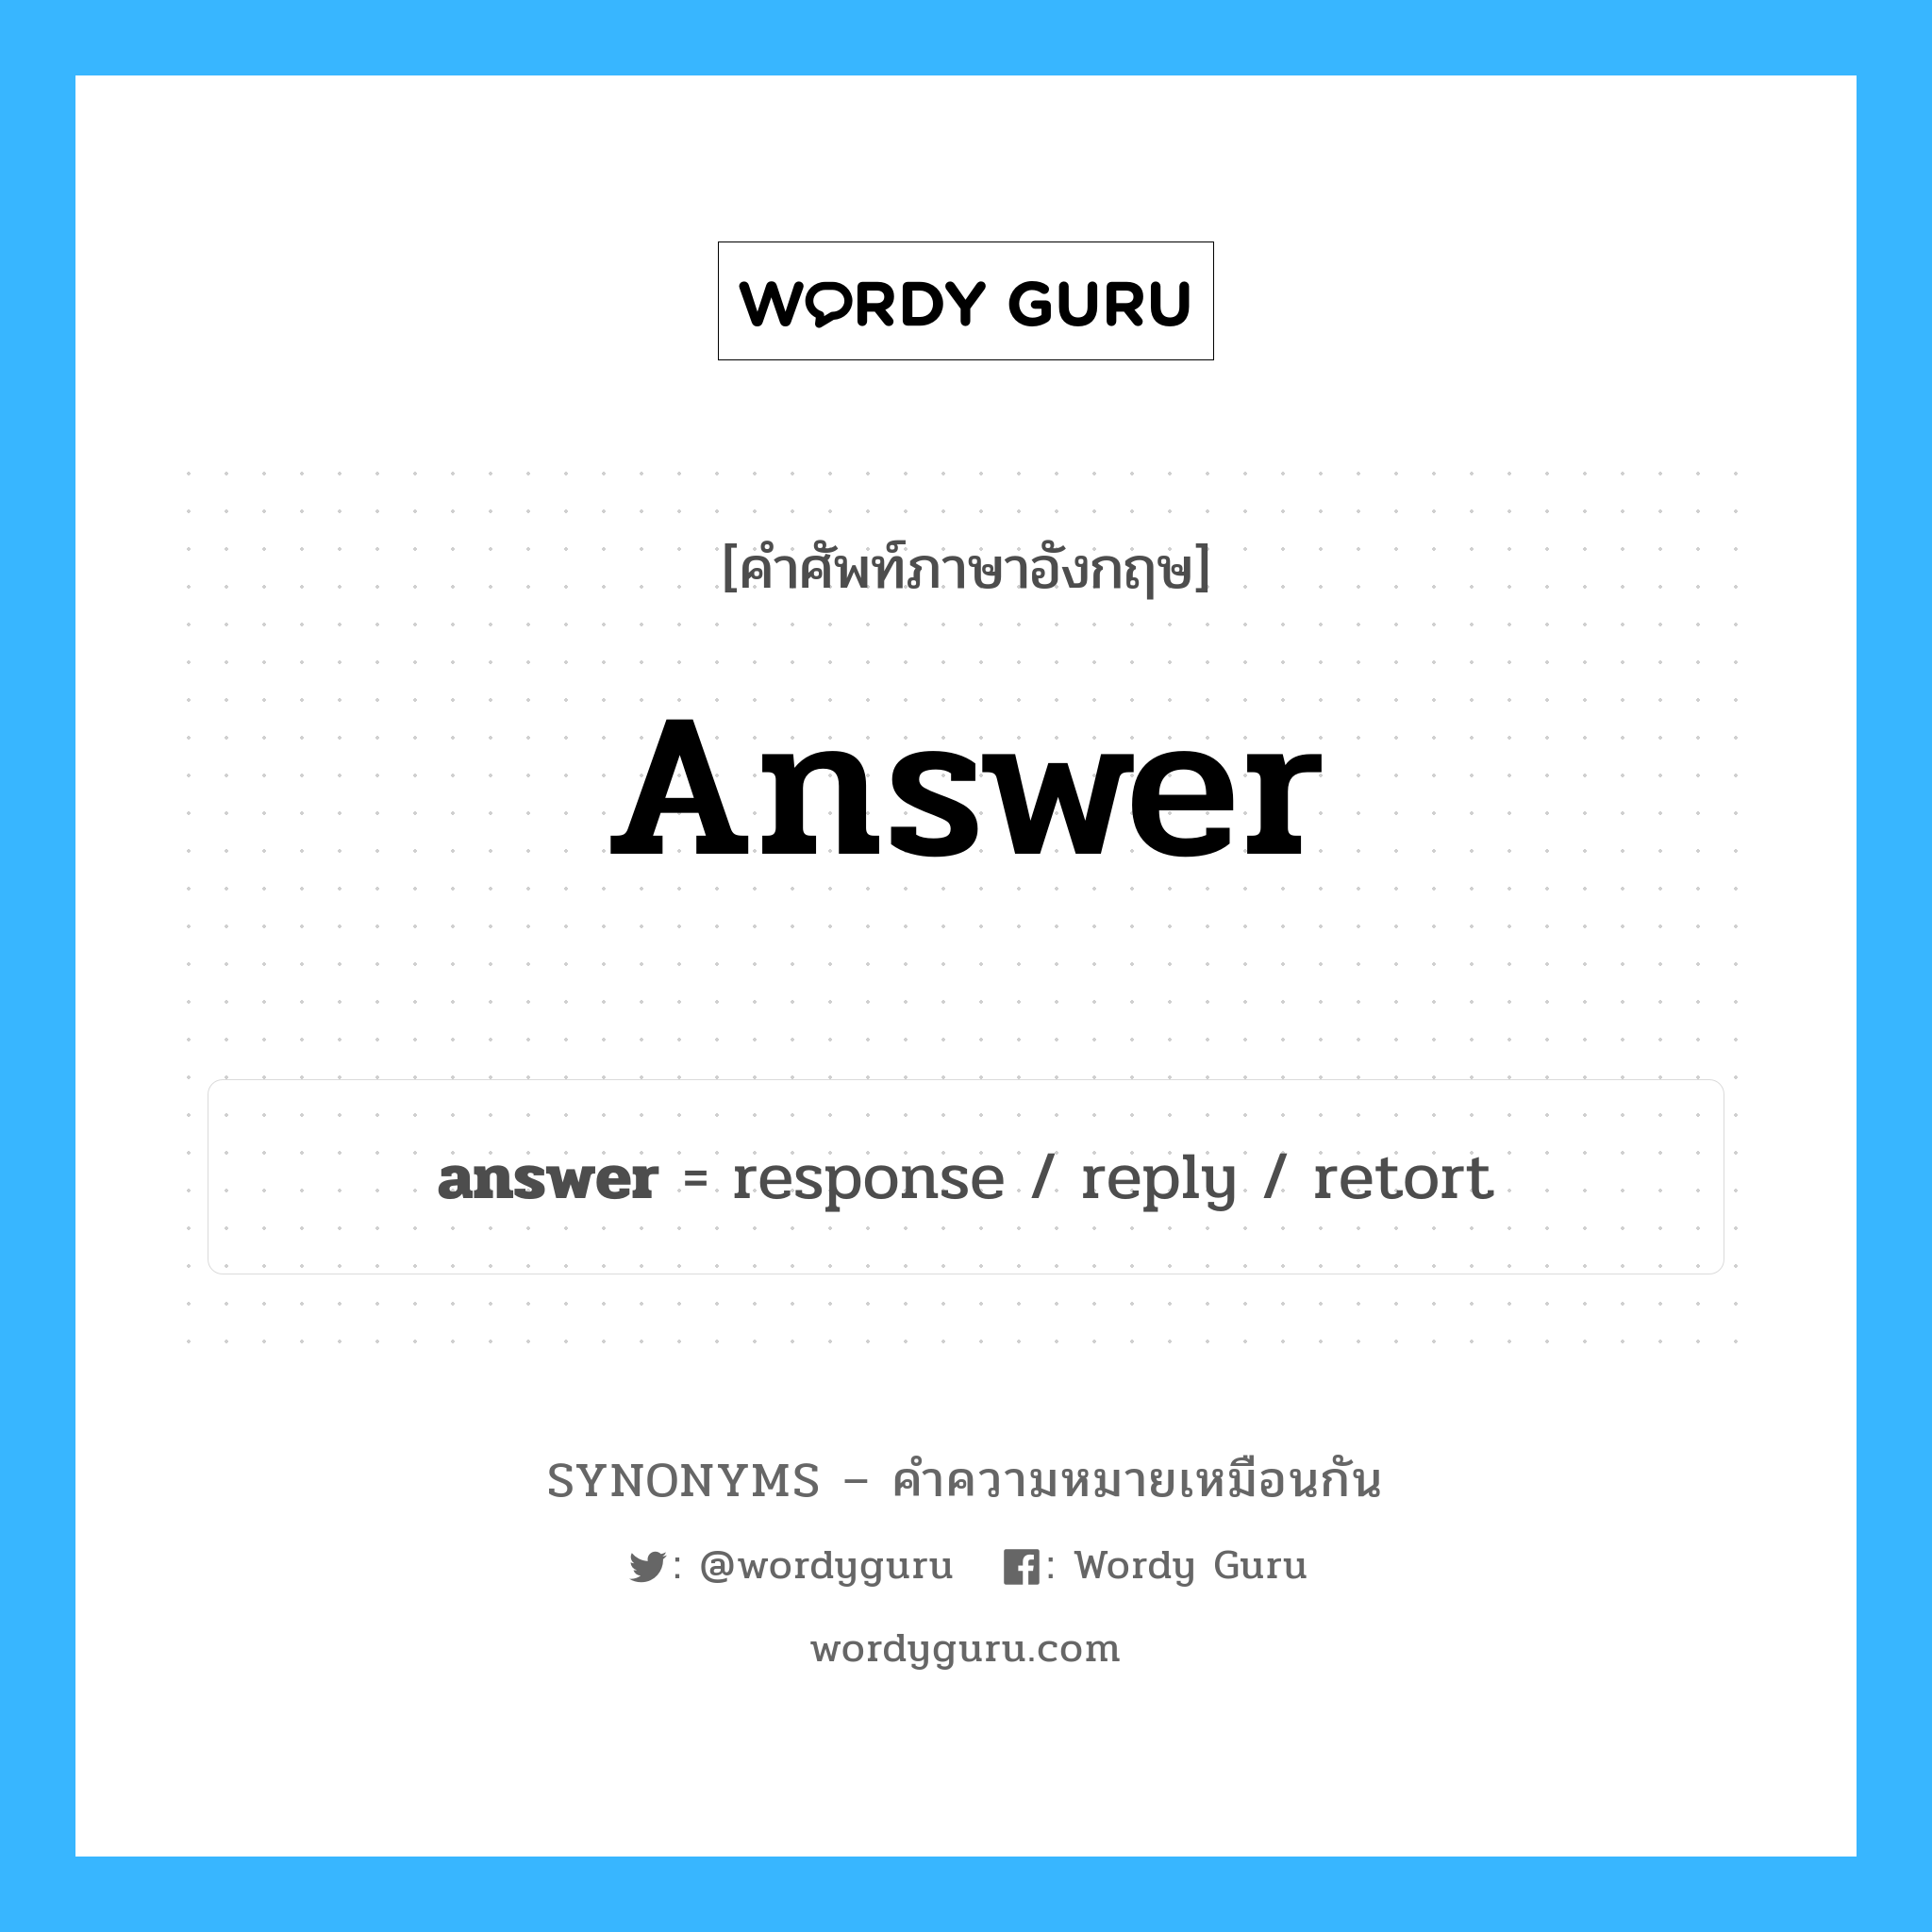 retort เป็นหนึ่งใน answer และมีคำอื่น ๆ อีกดังนี้, คำศัพท์ภาษาอังกฤษ retort ความหมายคล้ายกันกับ answer แปลว่า ยอกย้อน หมวด answer